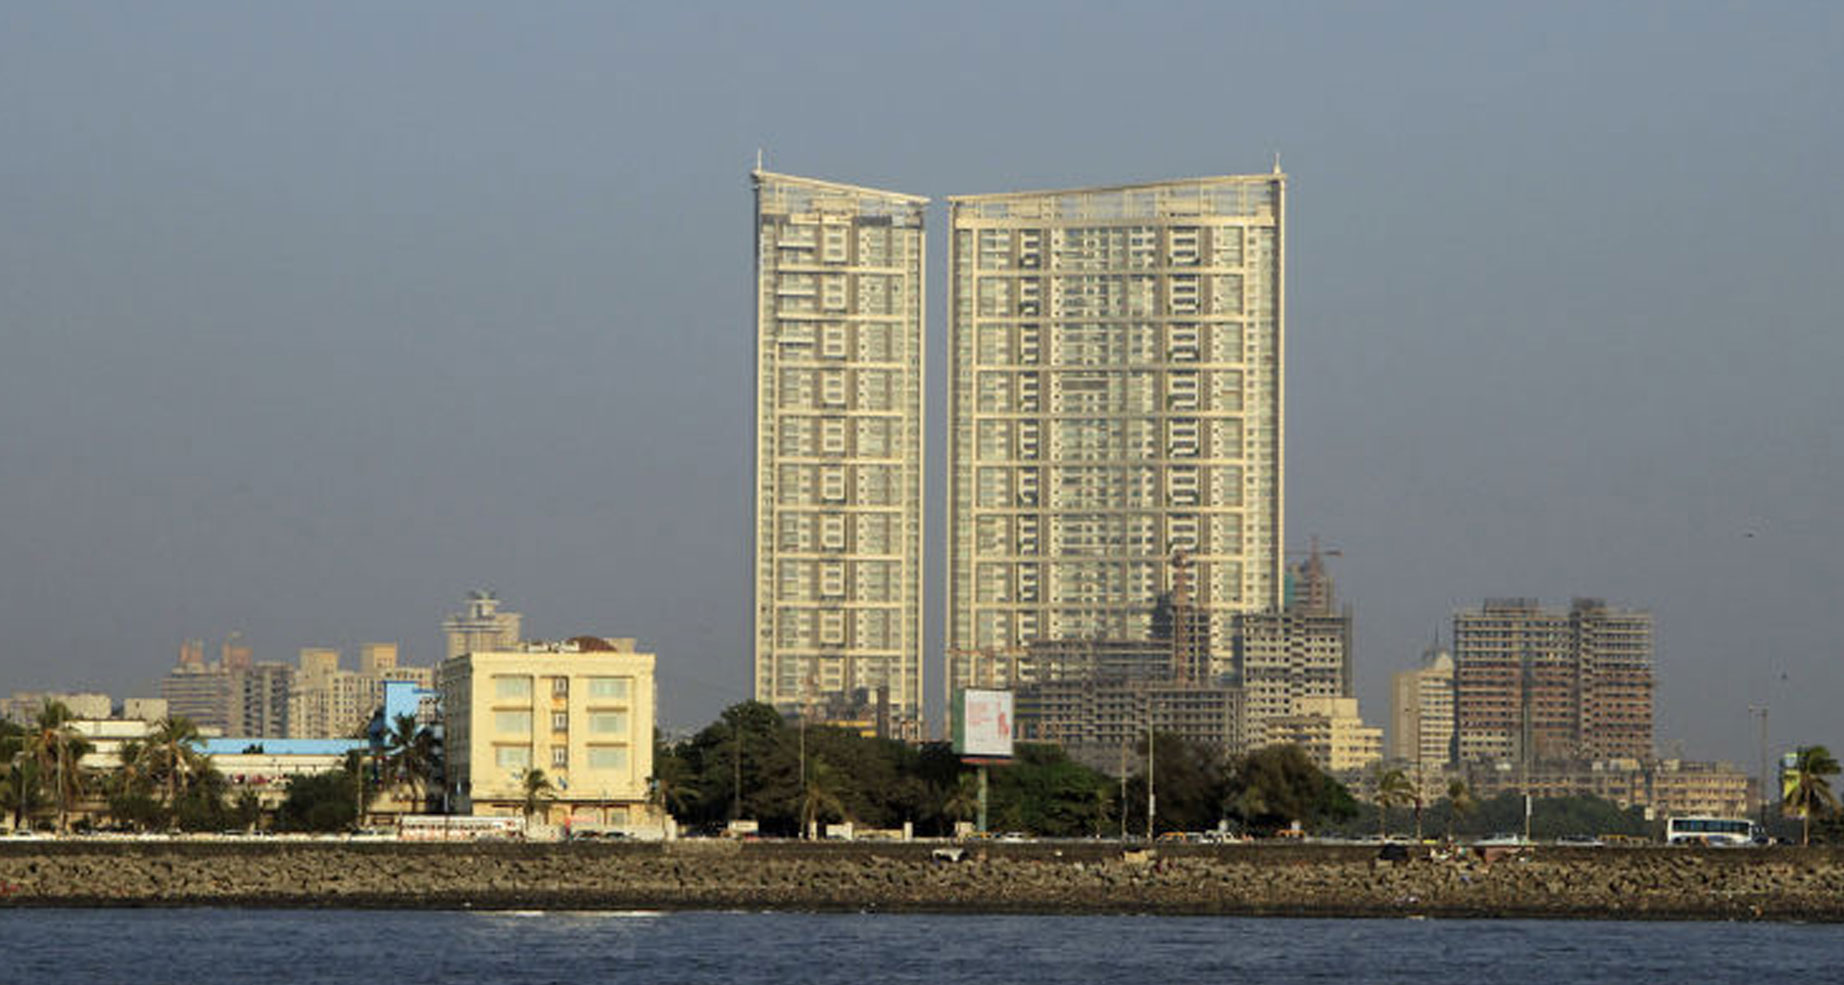 Lodha-Bellissimo Taking a closer look at the Mumbai skyscrapers